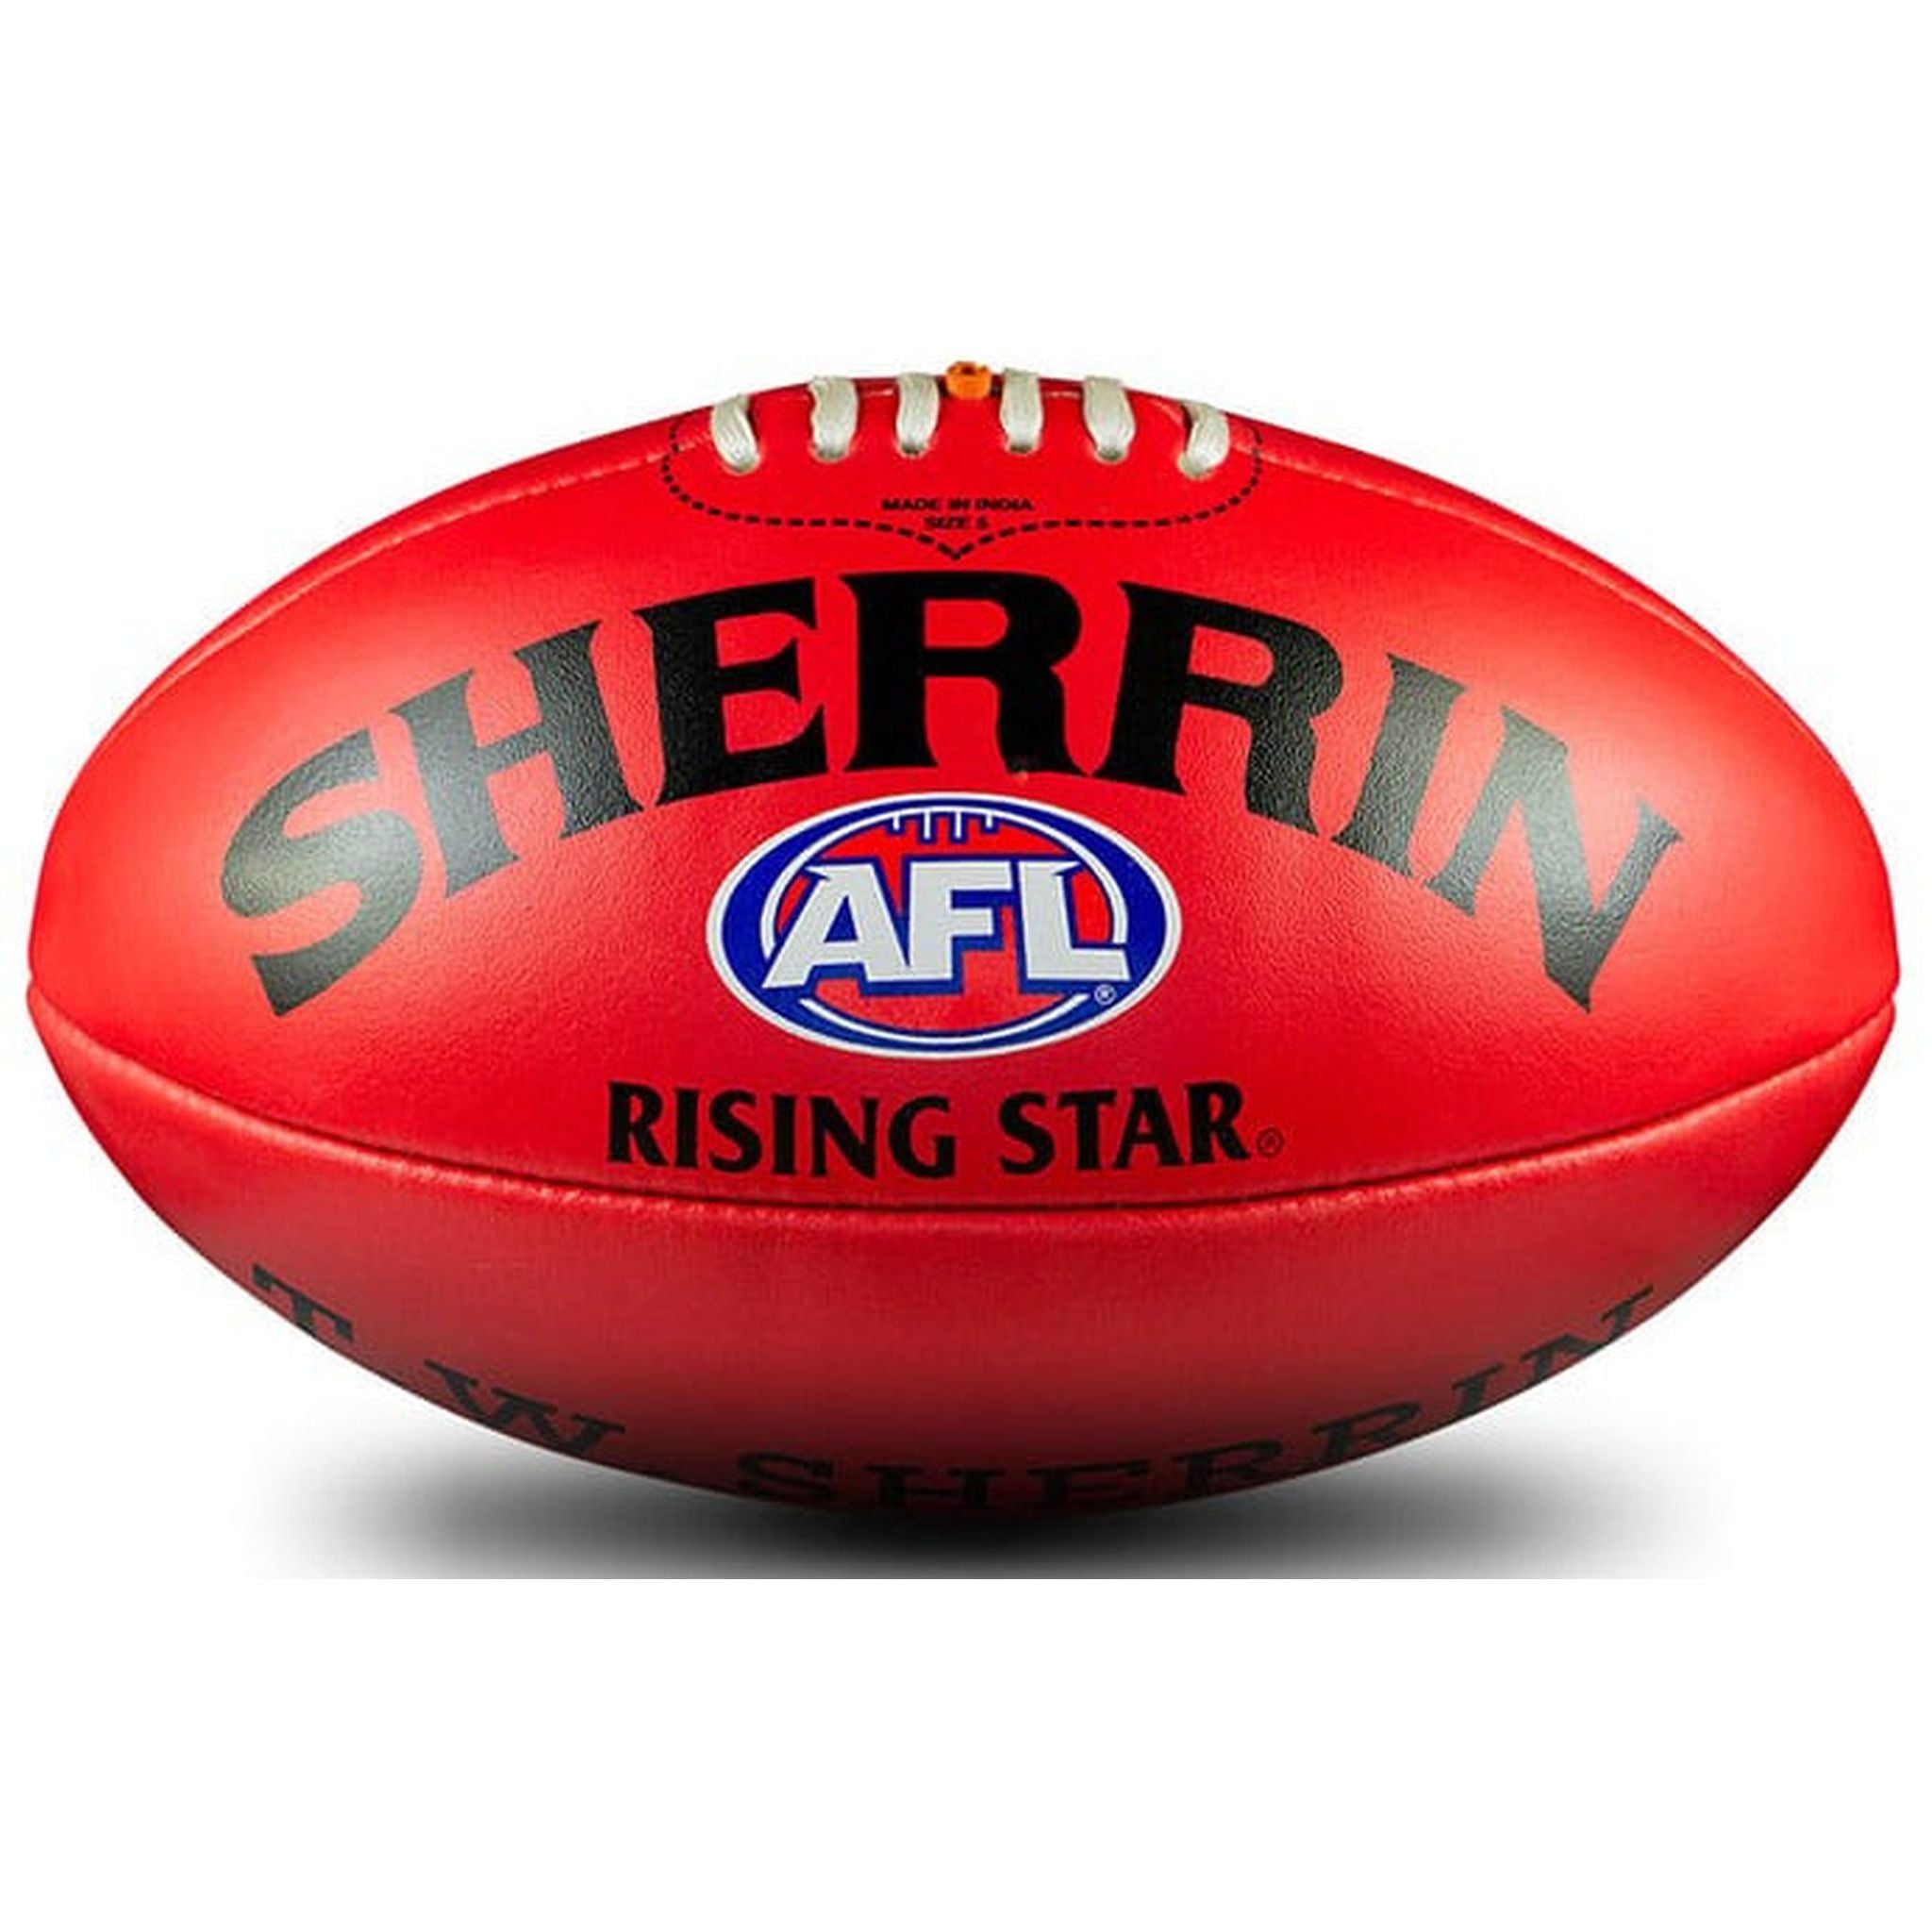 Sherrin Rising Star Leather Football